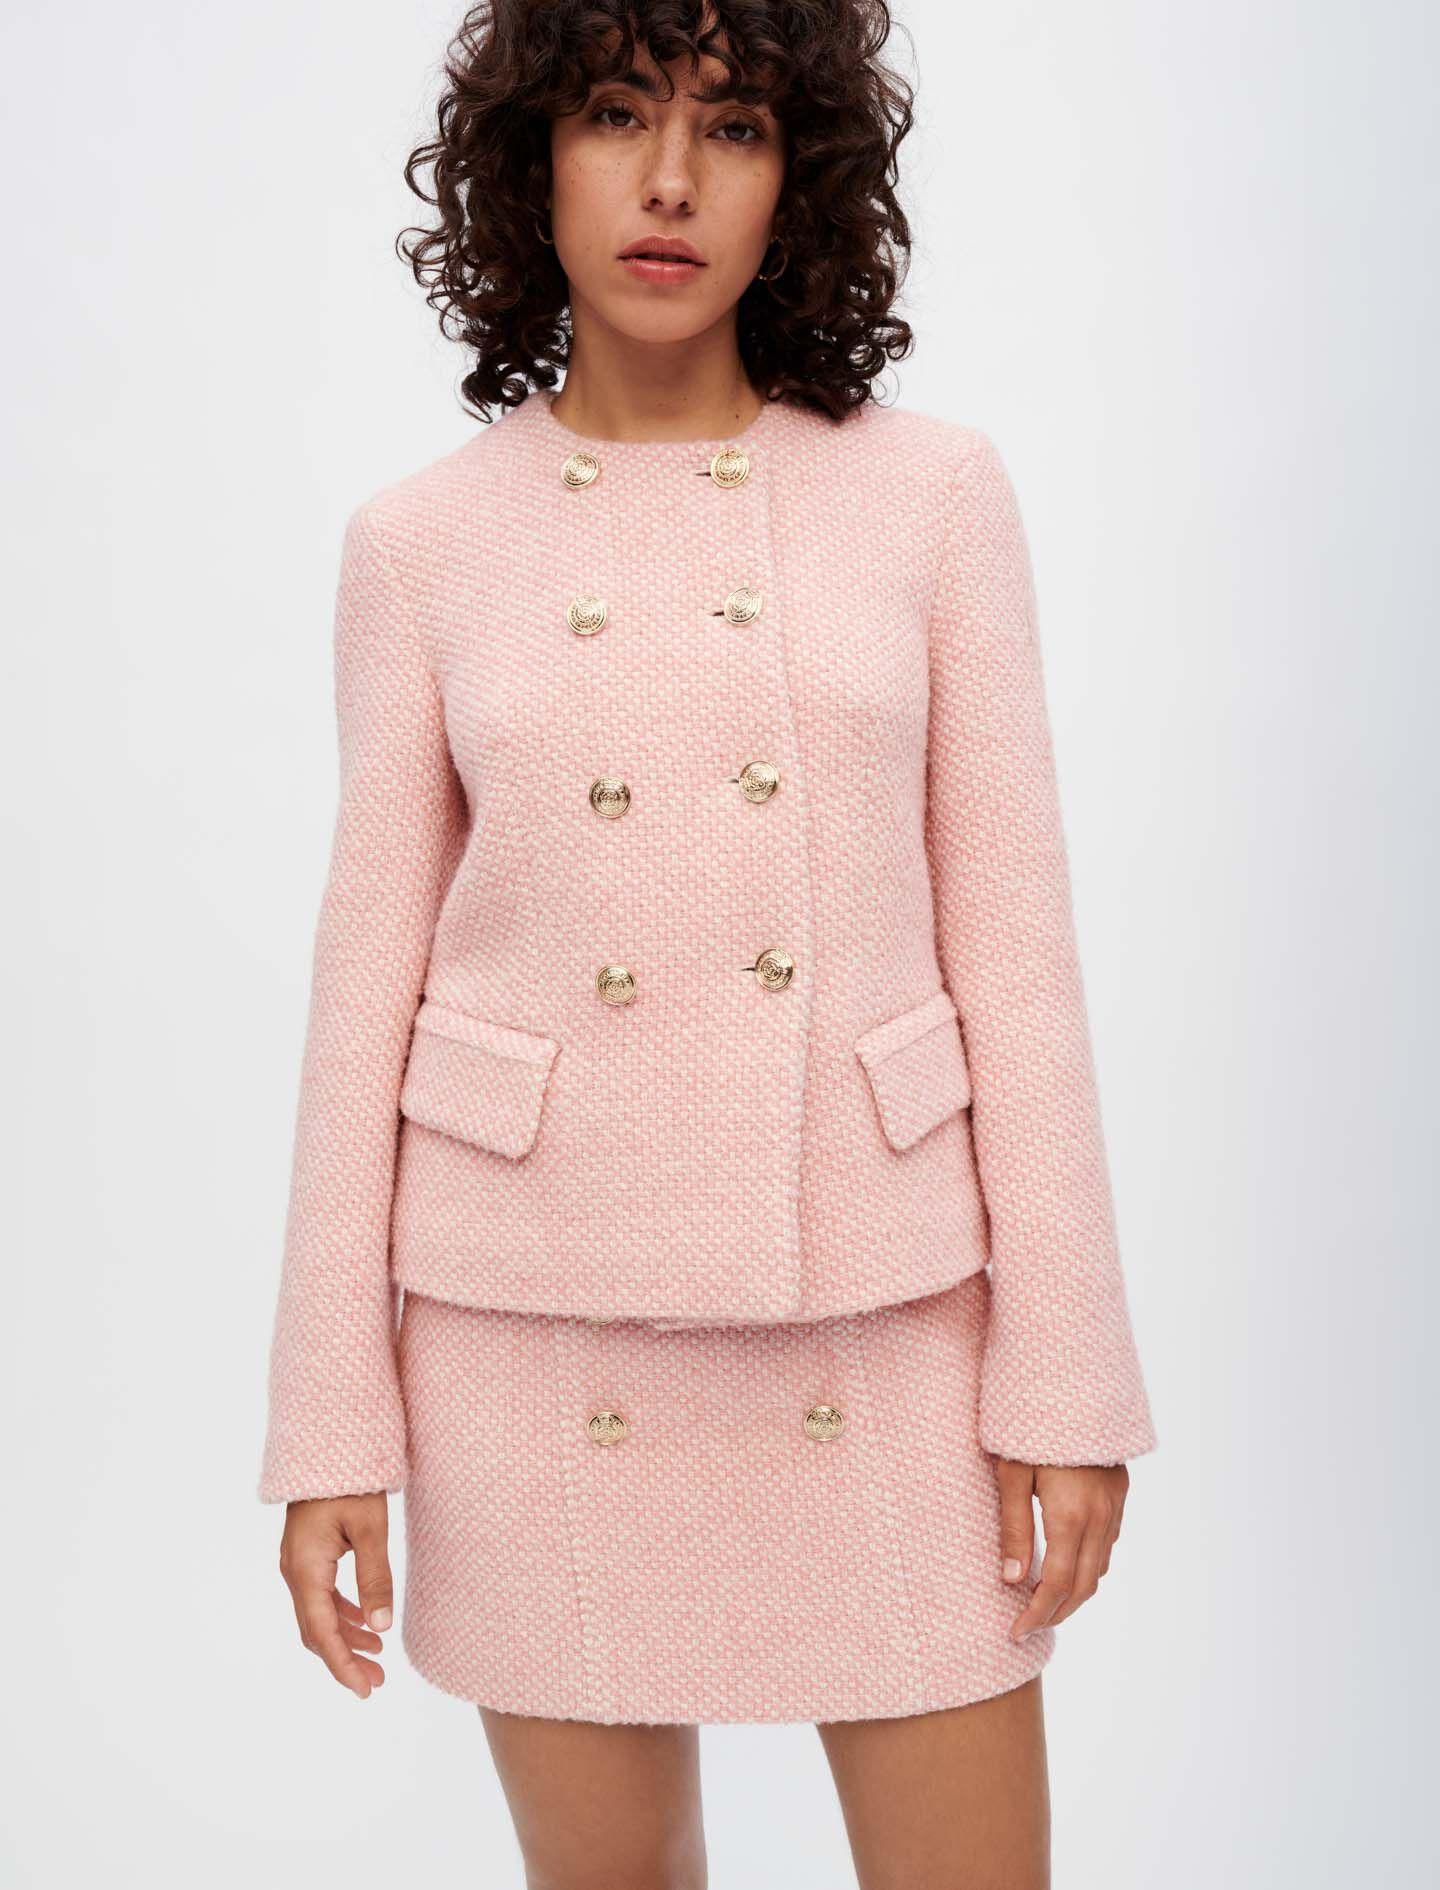 Maje Pink And Ecru Marl Tweed Jacket | Lyst